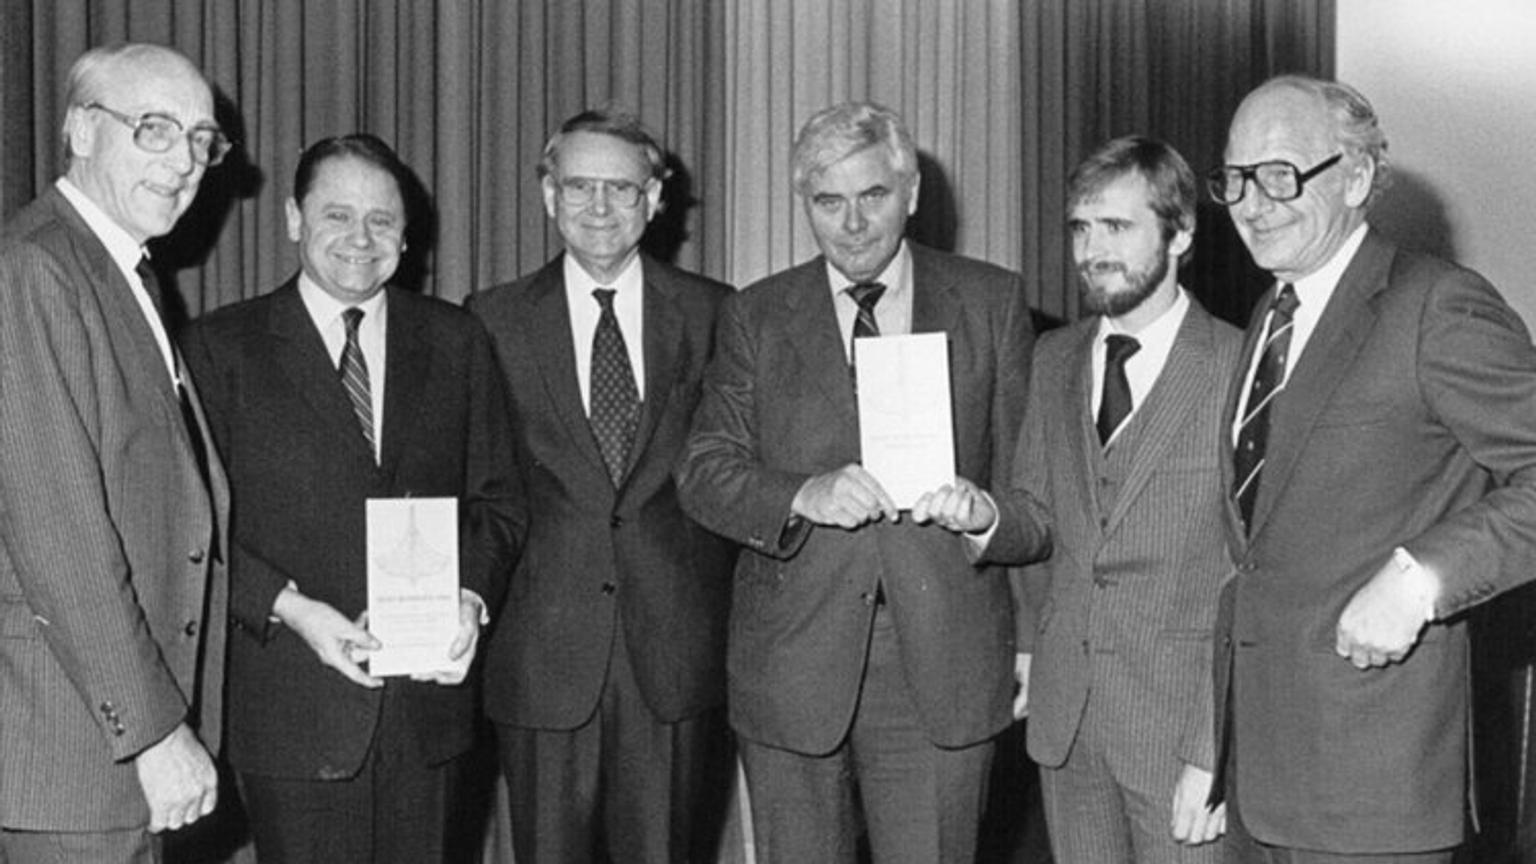 Group of men receiving award